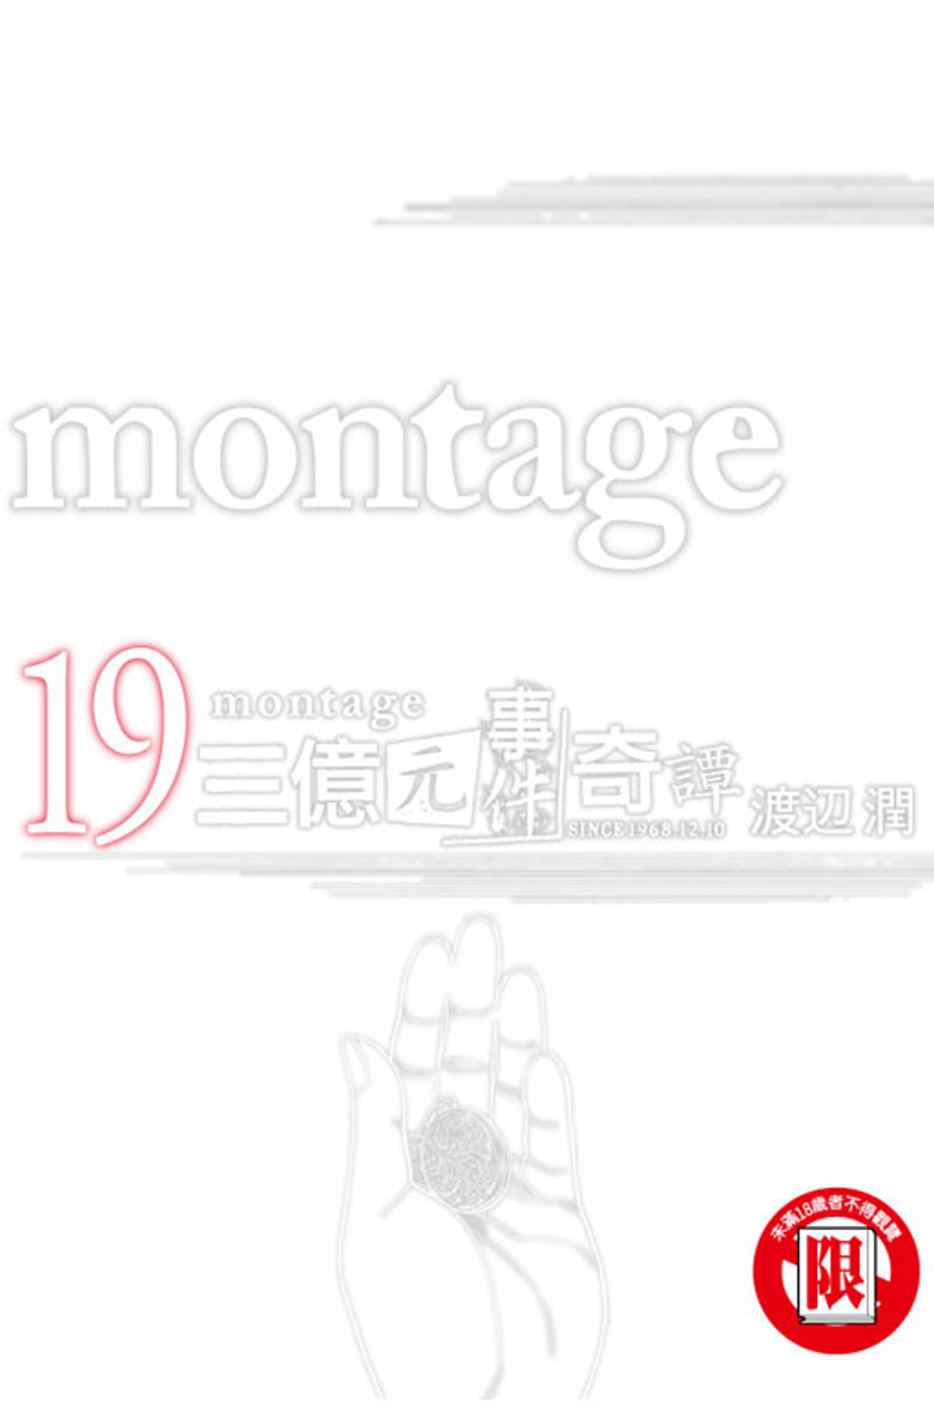 montage 三億元事件奇譚 19完(限台灣)